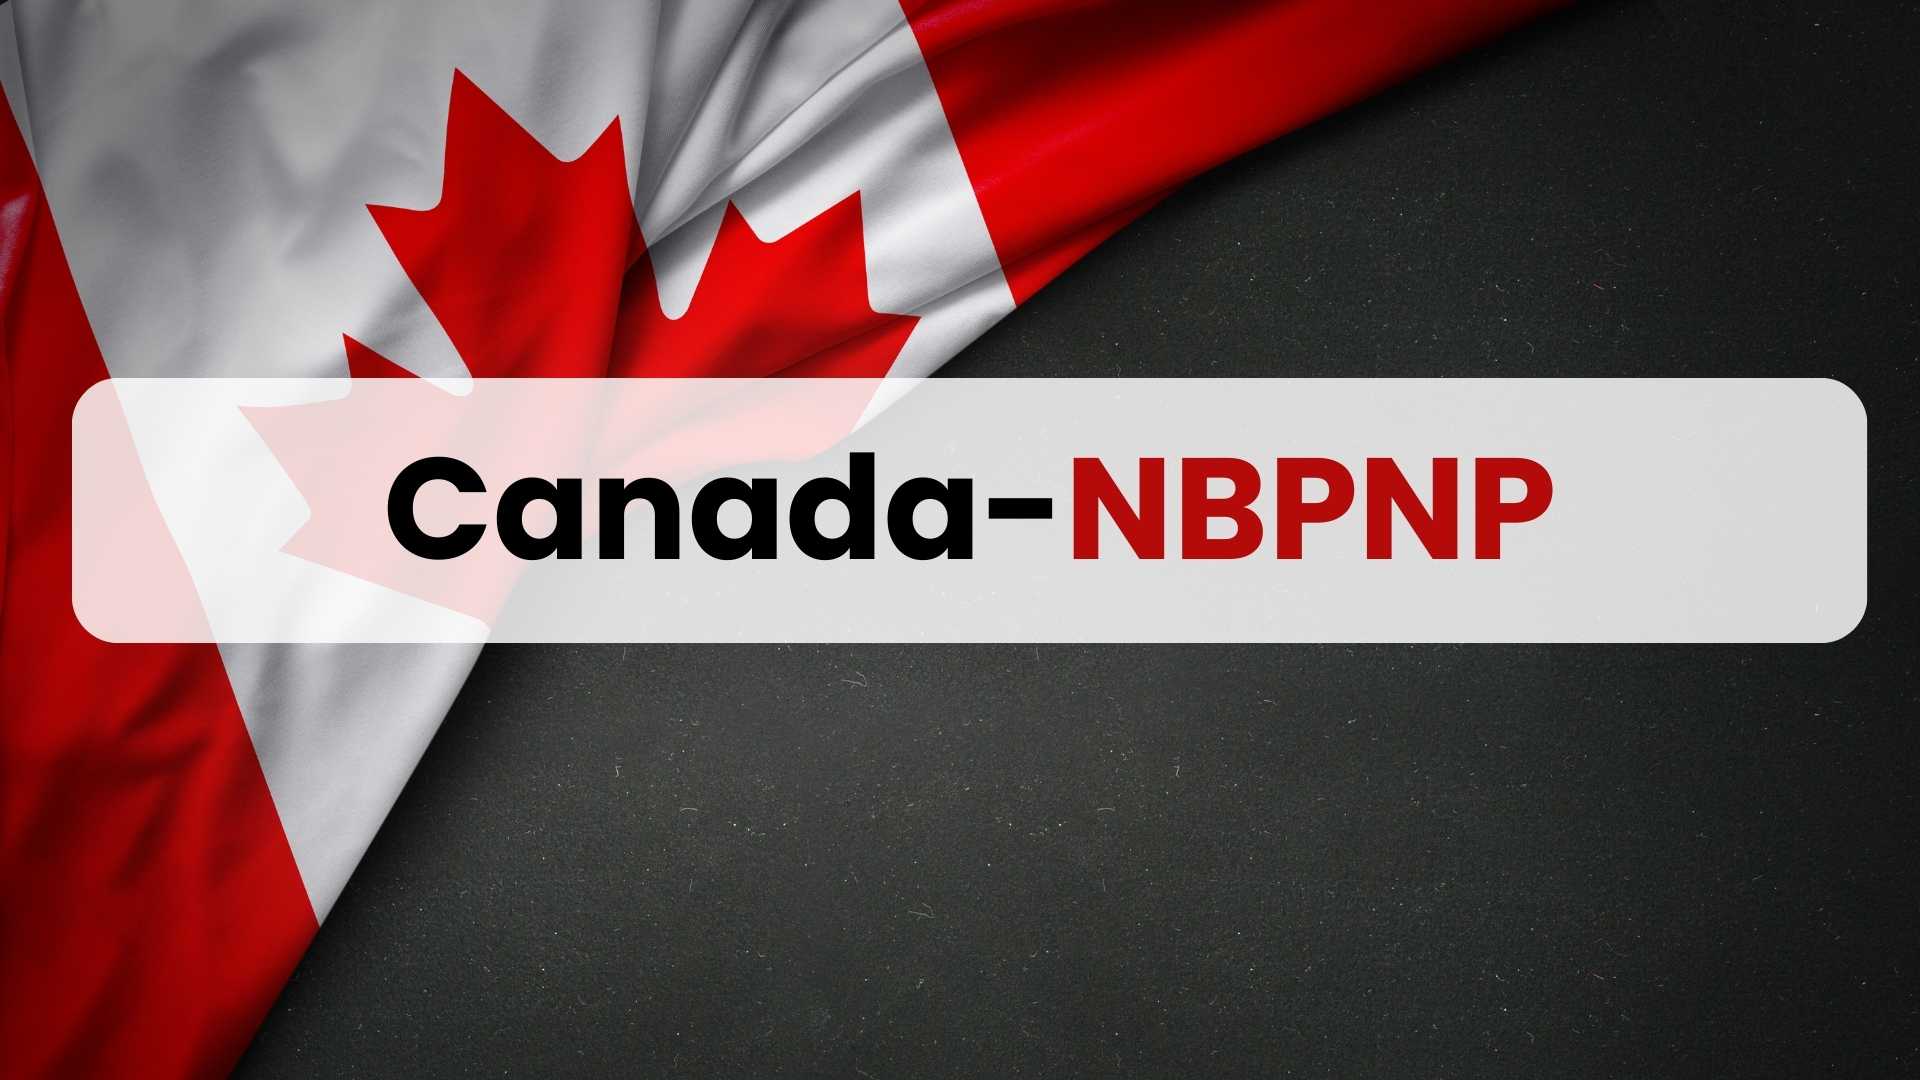 Canada-NBPNP (New Brunswick Provincial Nominee Program)